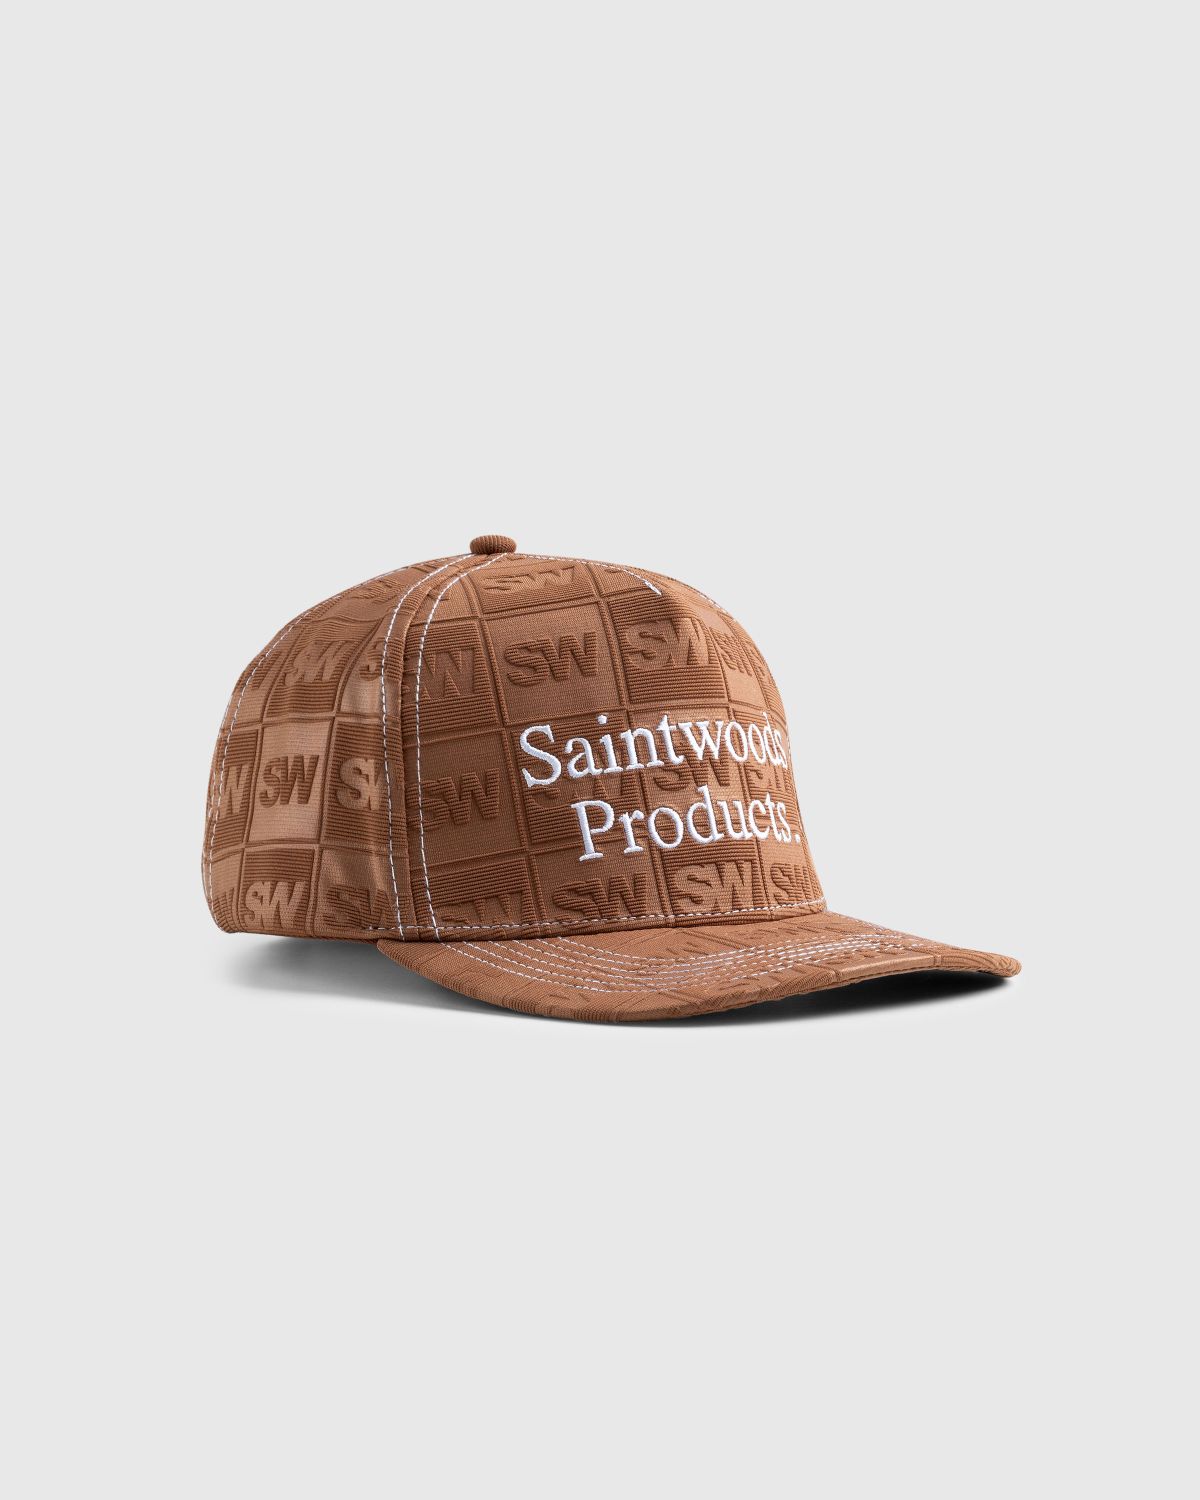 Shop – Products | Saintwoods SW Brown Highsnobiety Hat